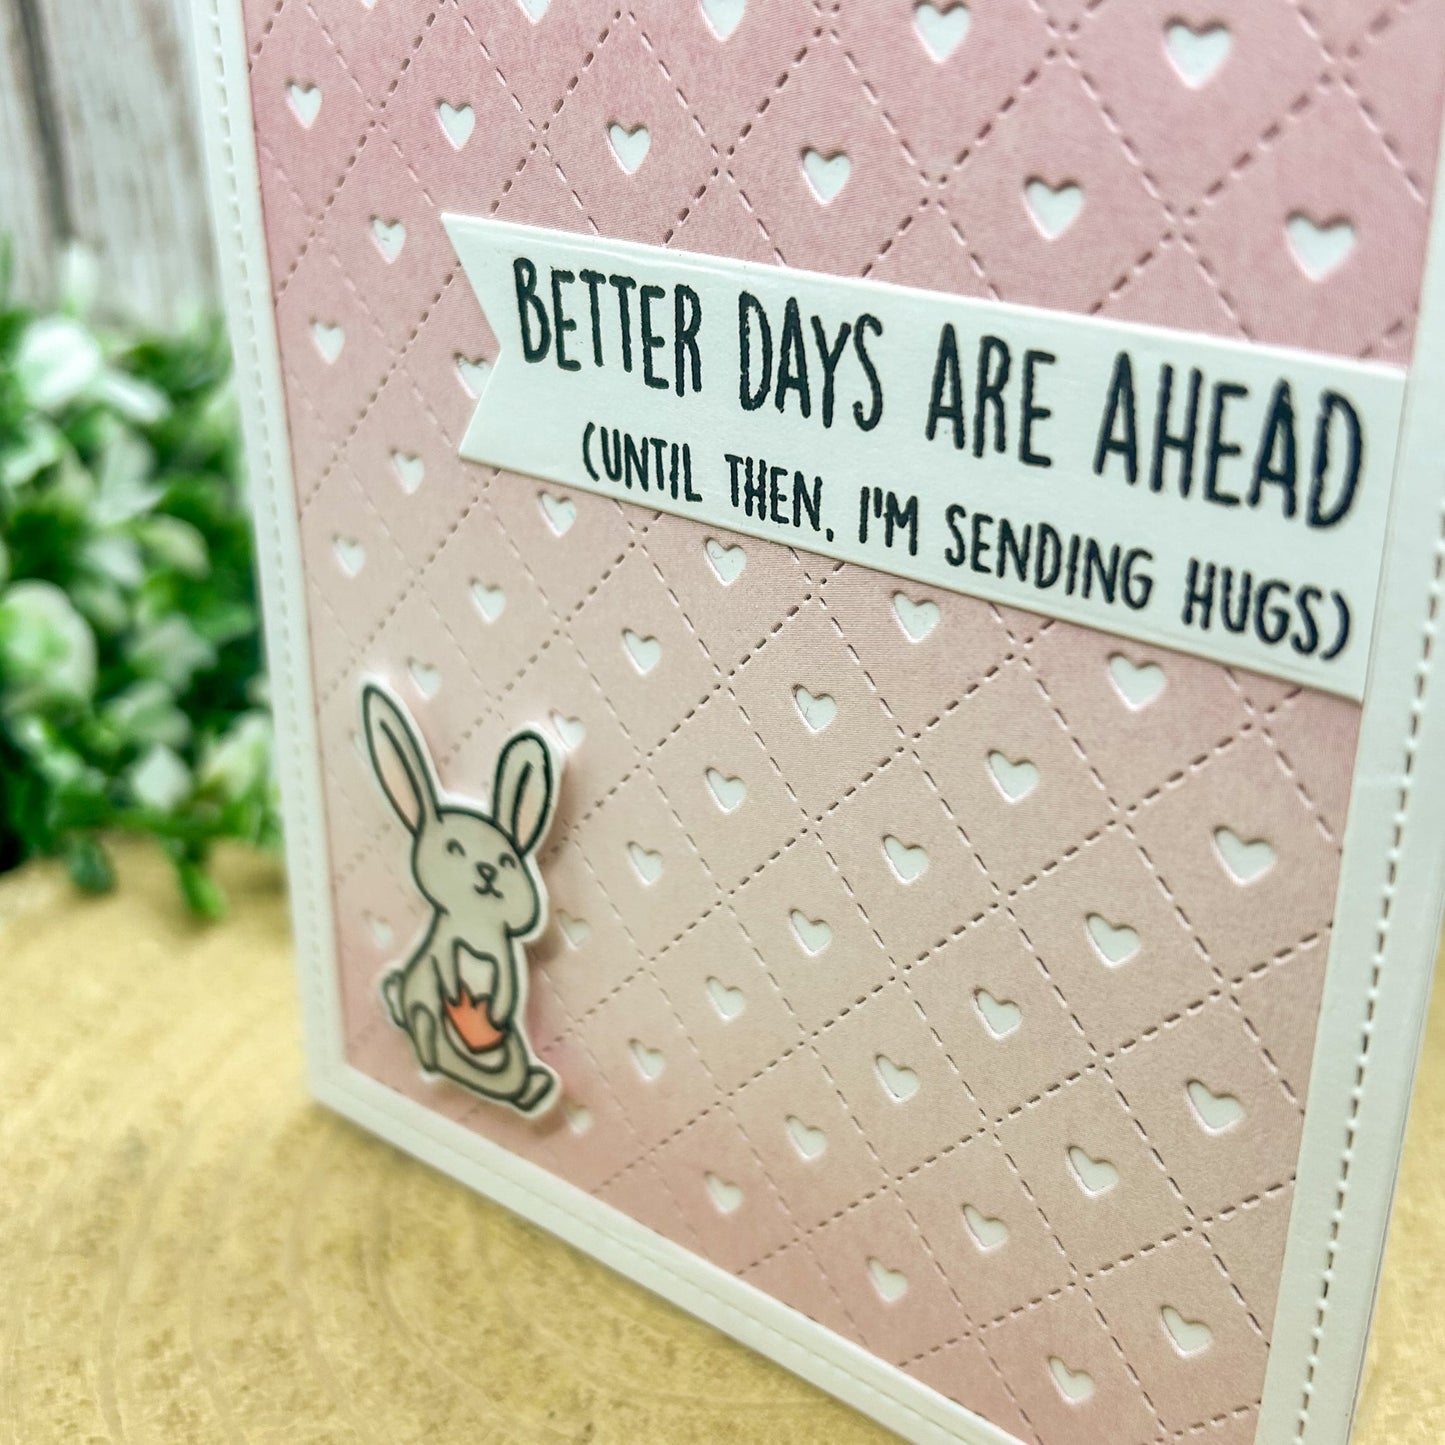  Better Days Ahead SympathyEncouragement Handmade Card-2